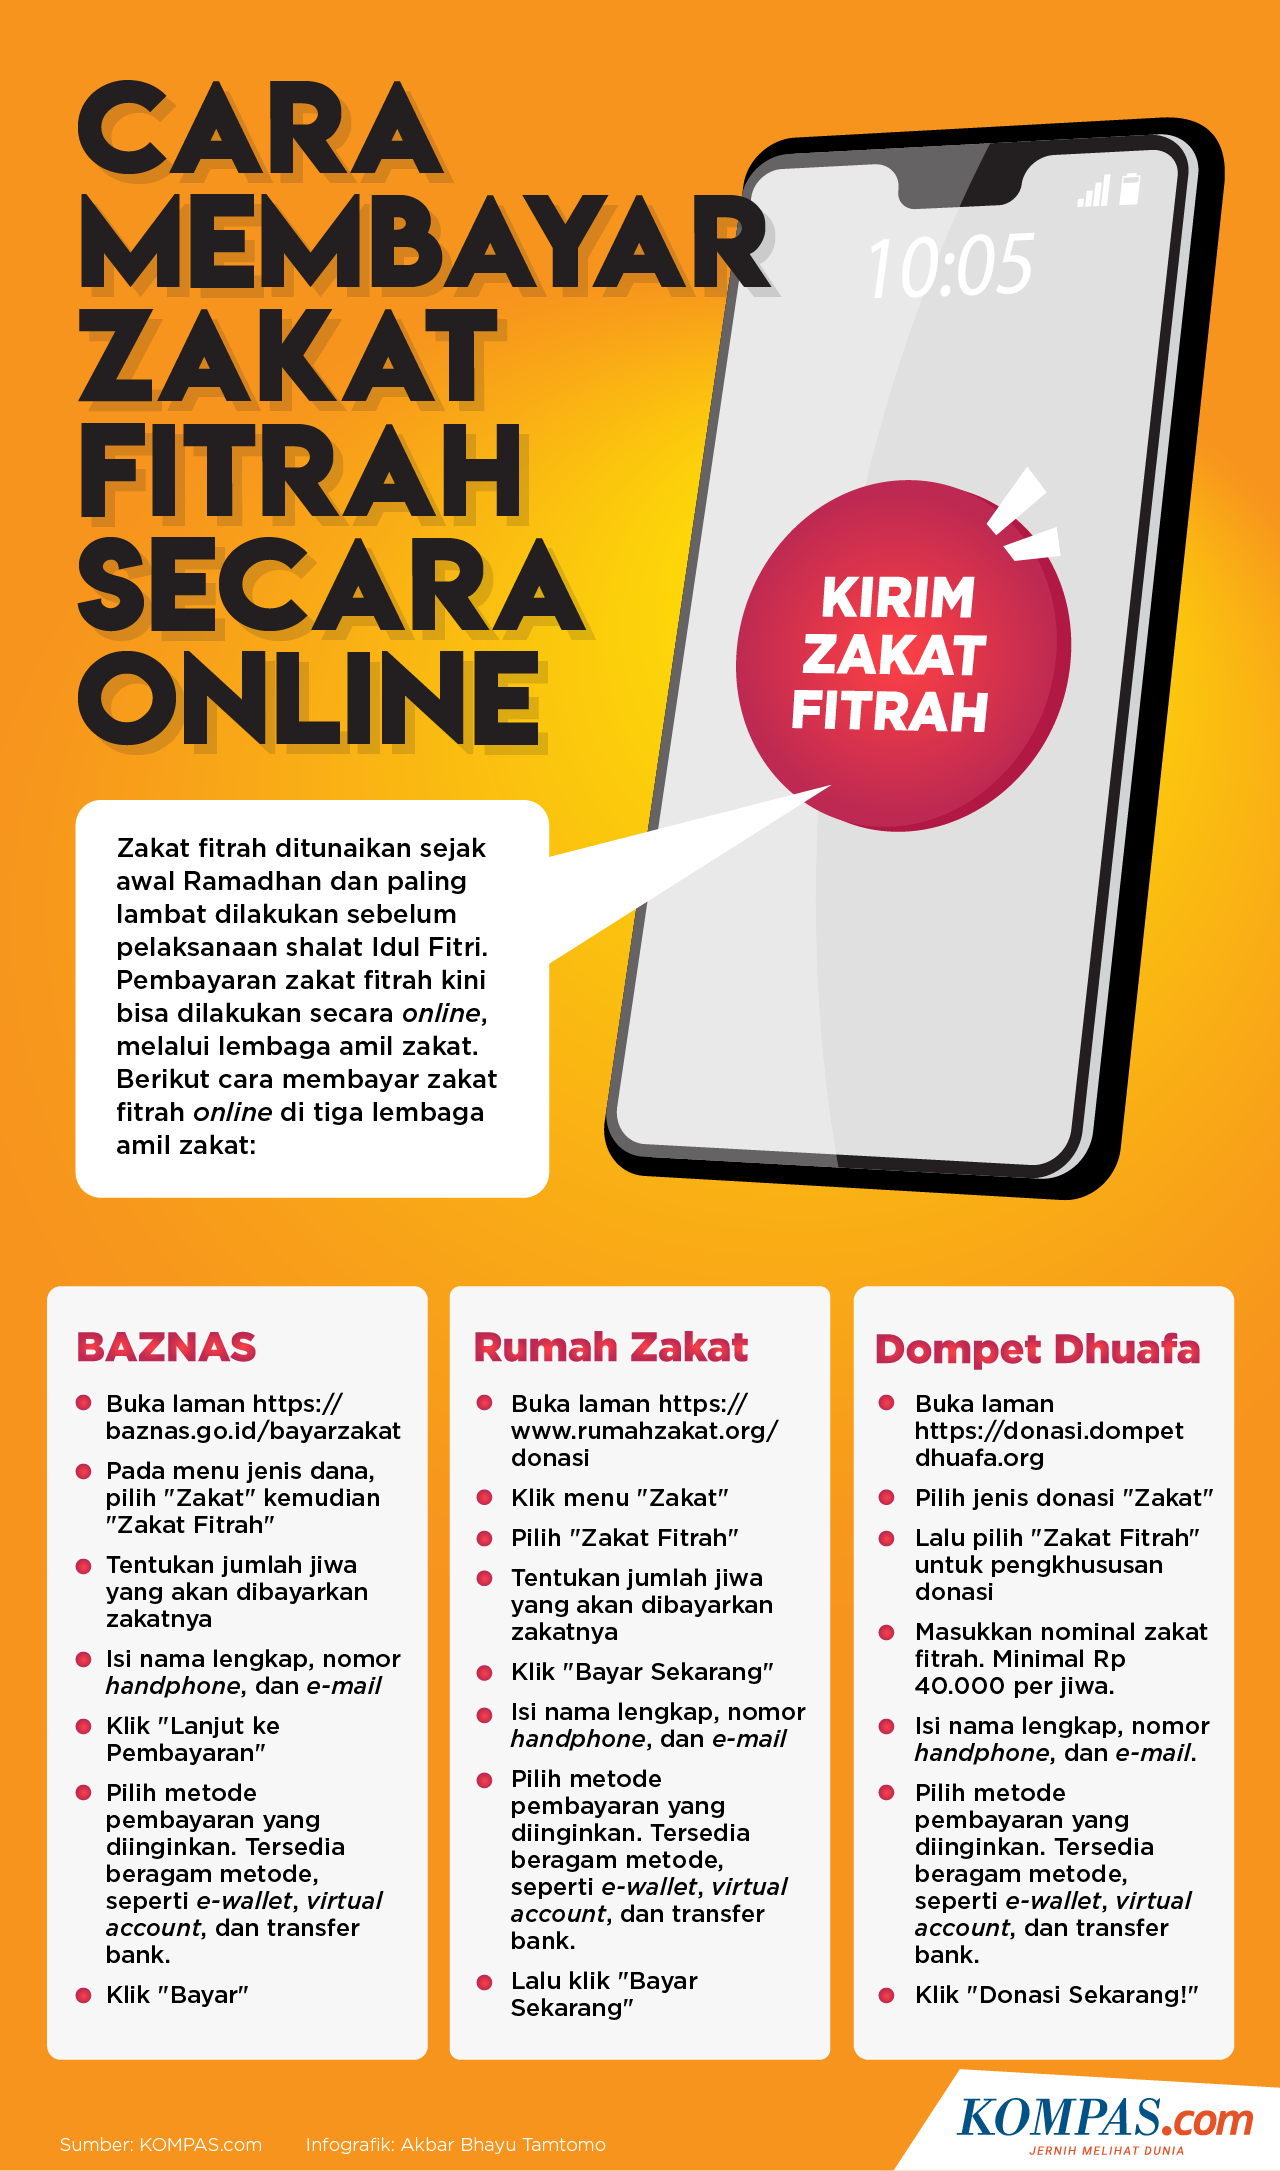 Fitrah online 2021 zakat Cara Membayar